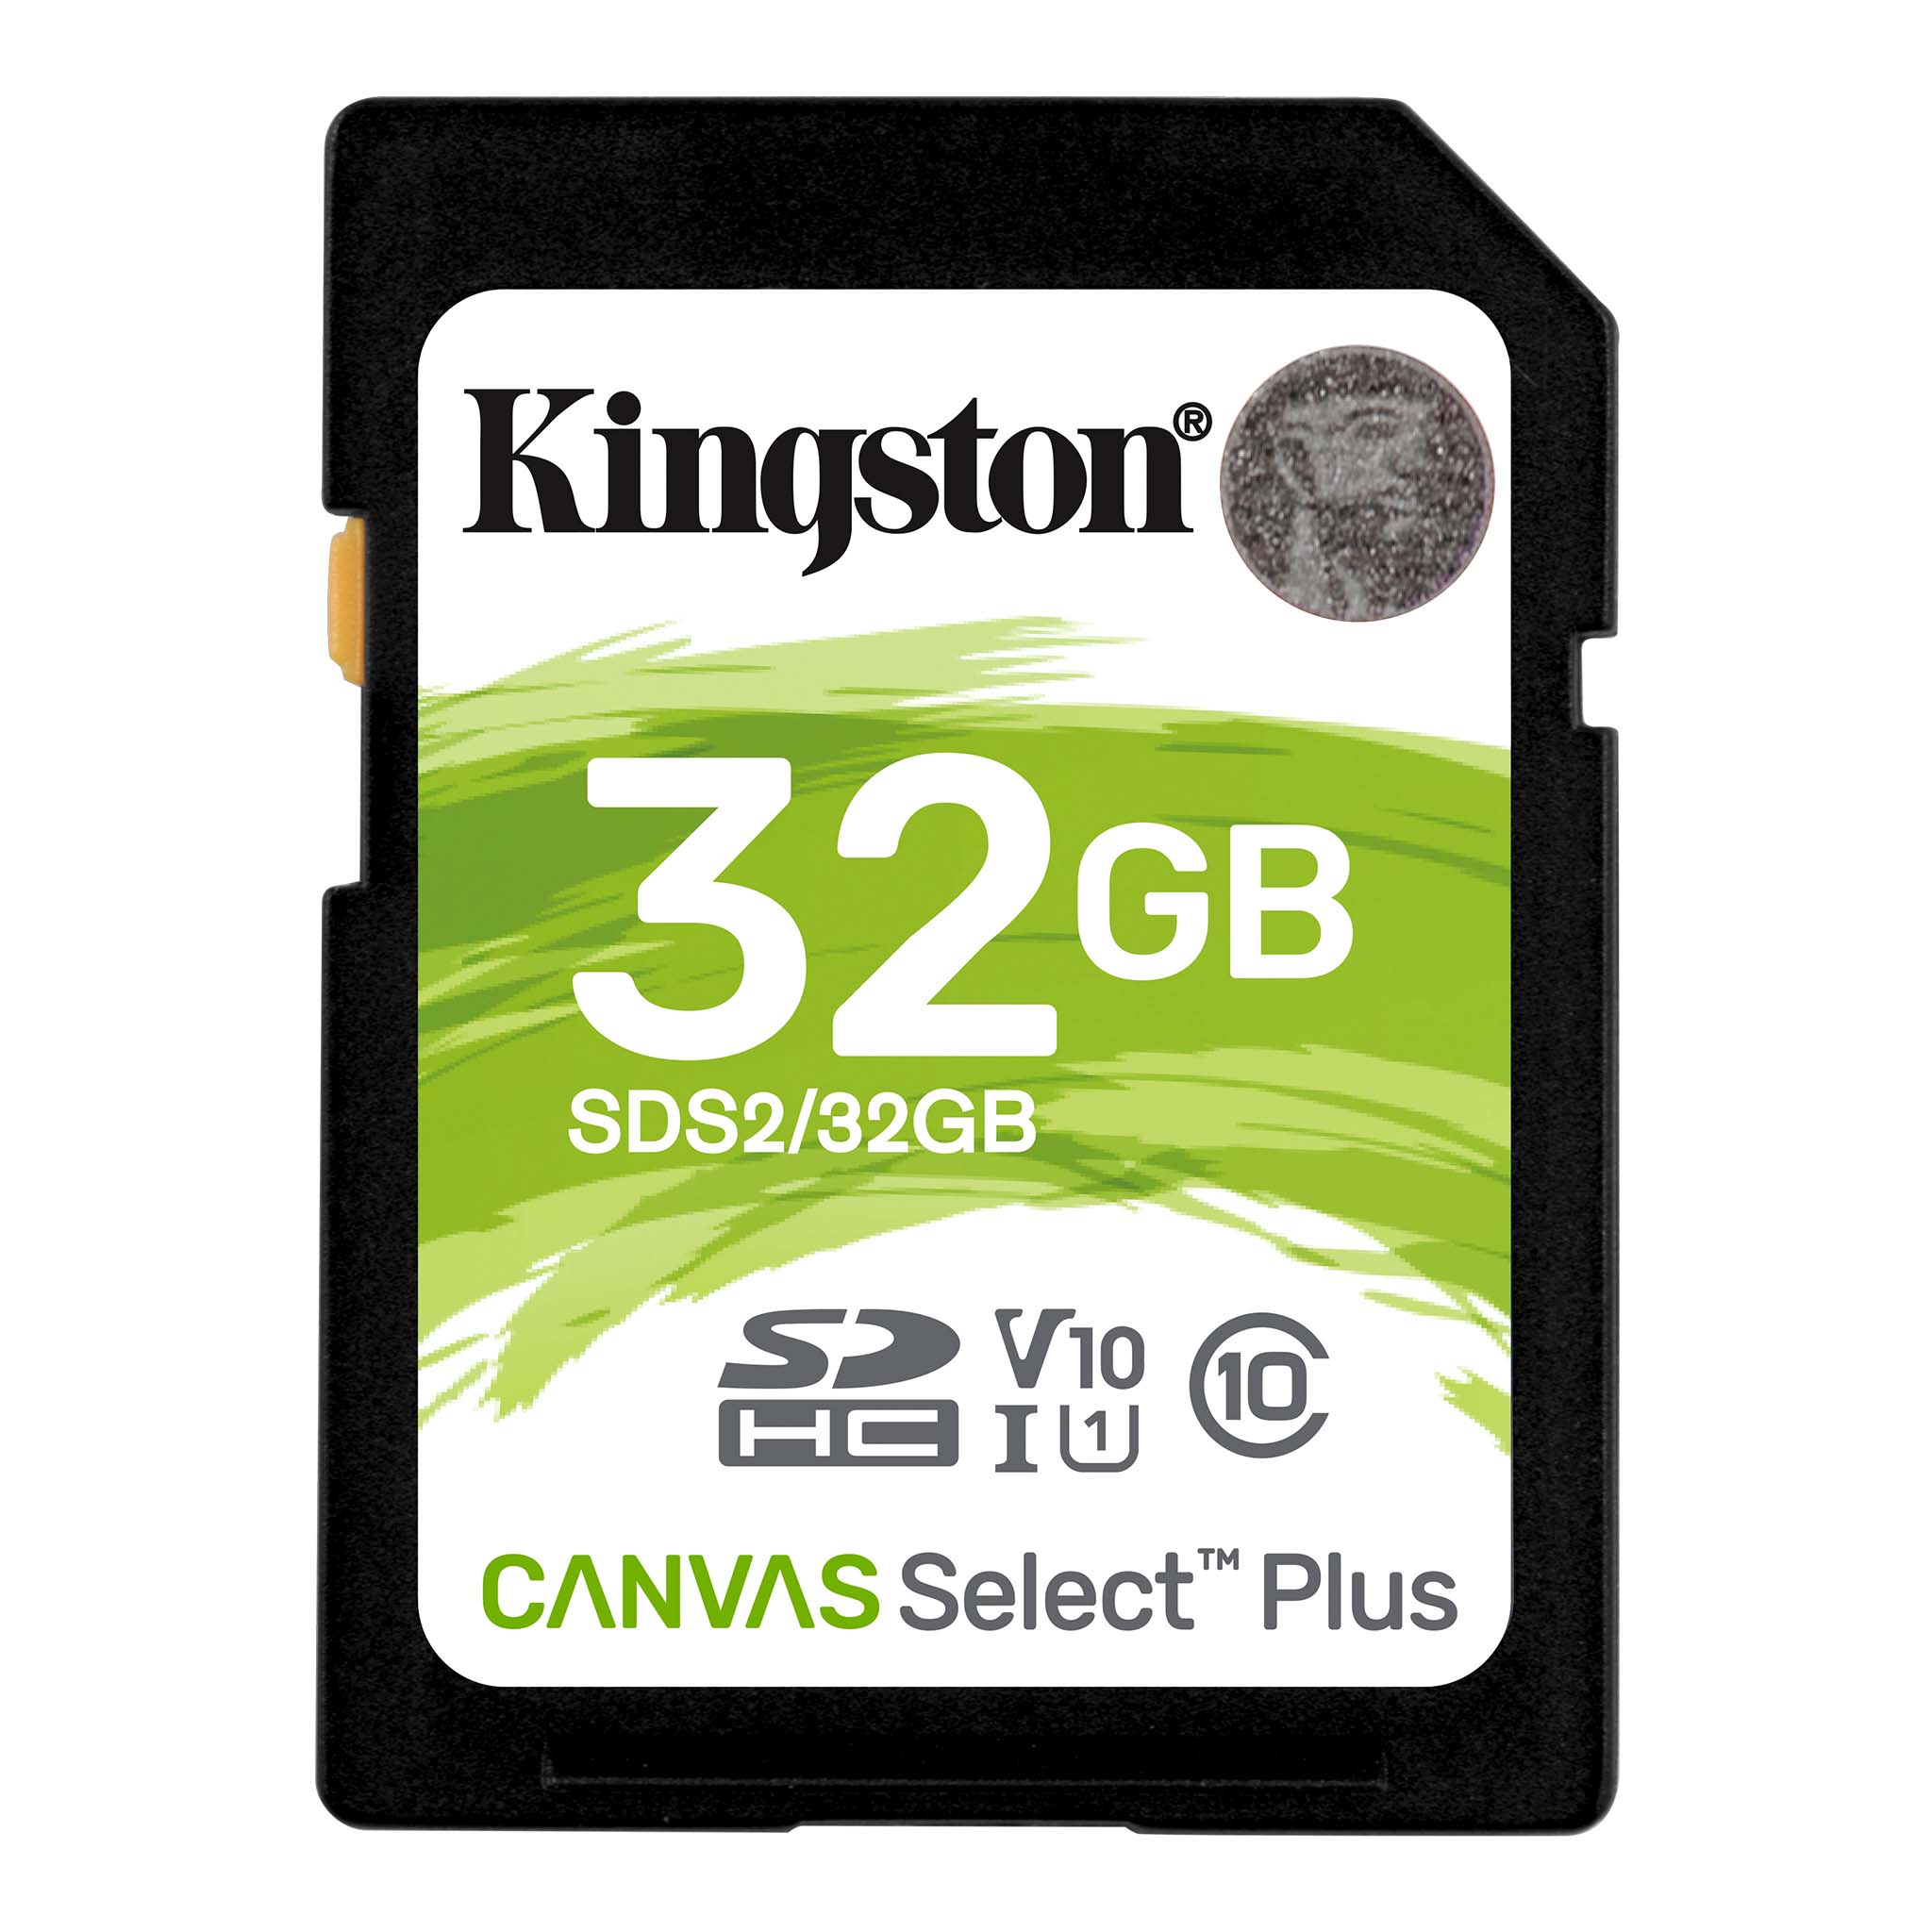 100MBs Works with Kingston Kingston 128GB Canon VIXIA HF R300 MicroSDXC Canvas Select Plus Card Verified by SanFlash. 